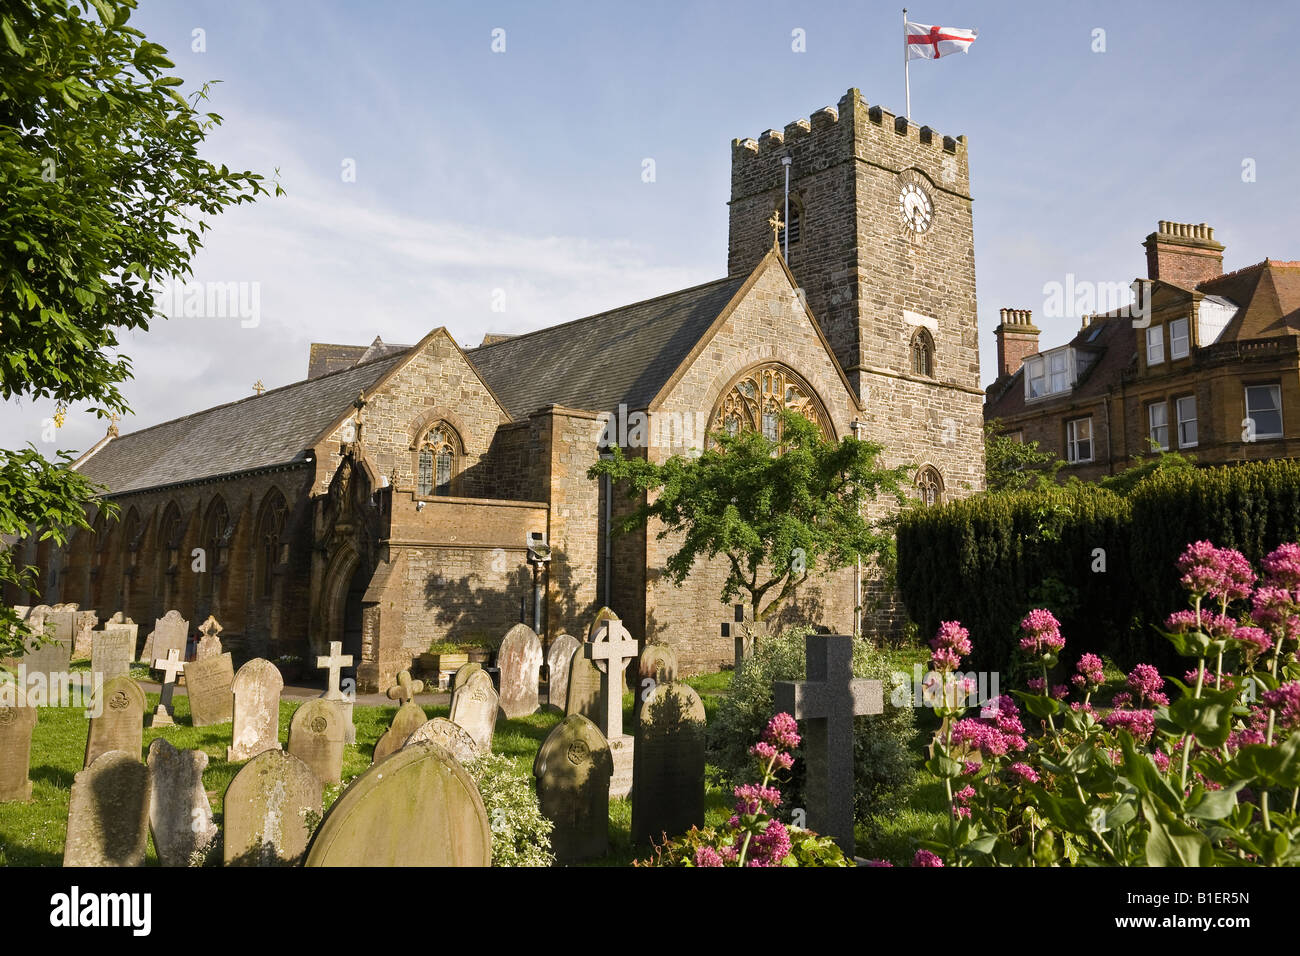 Parish church of St Mary the Virgin, Lynton, Exmoor National Park, Devon, England, UK Stock Photo